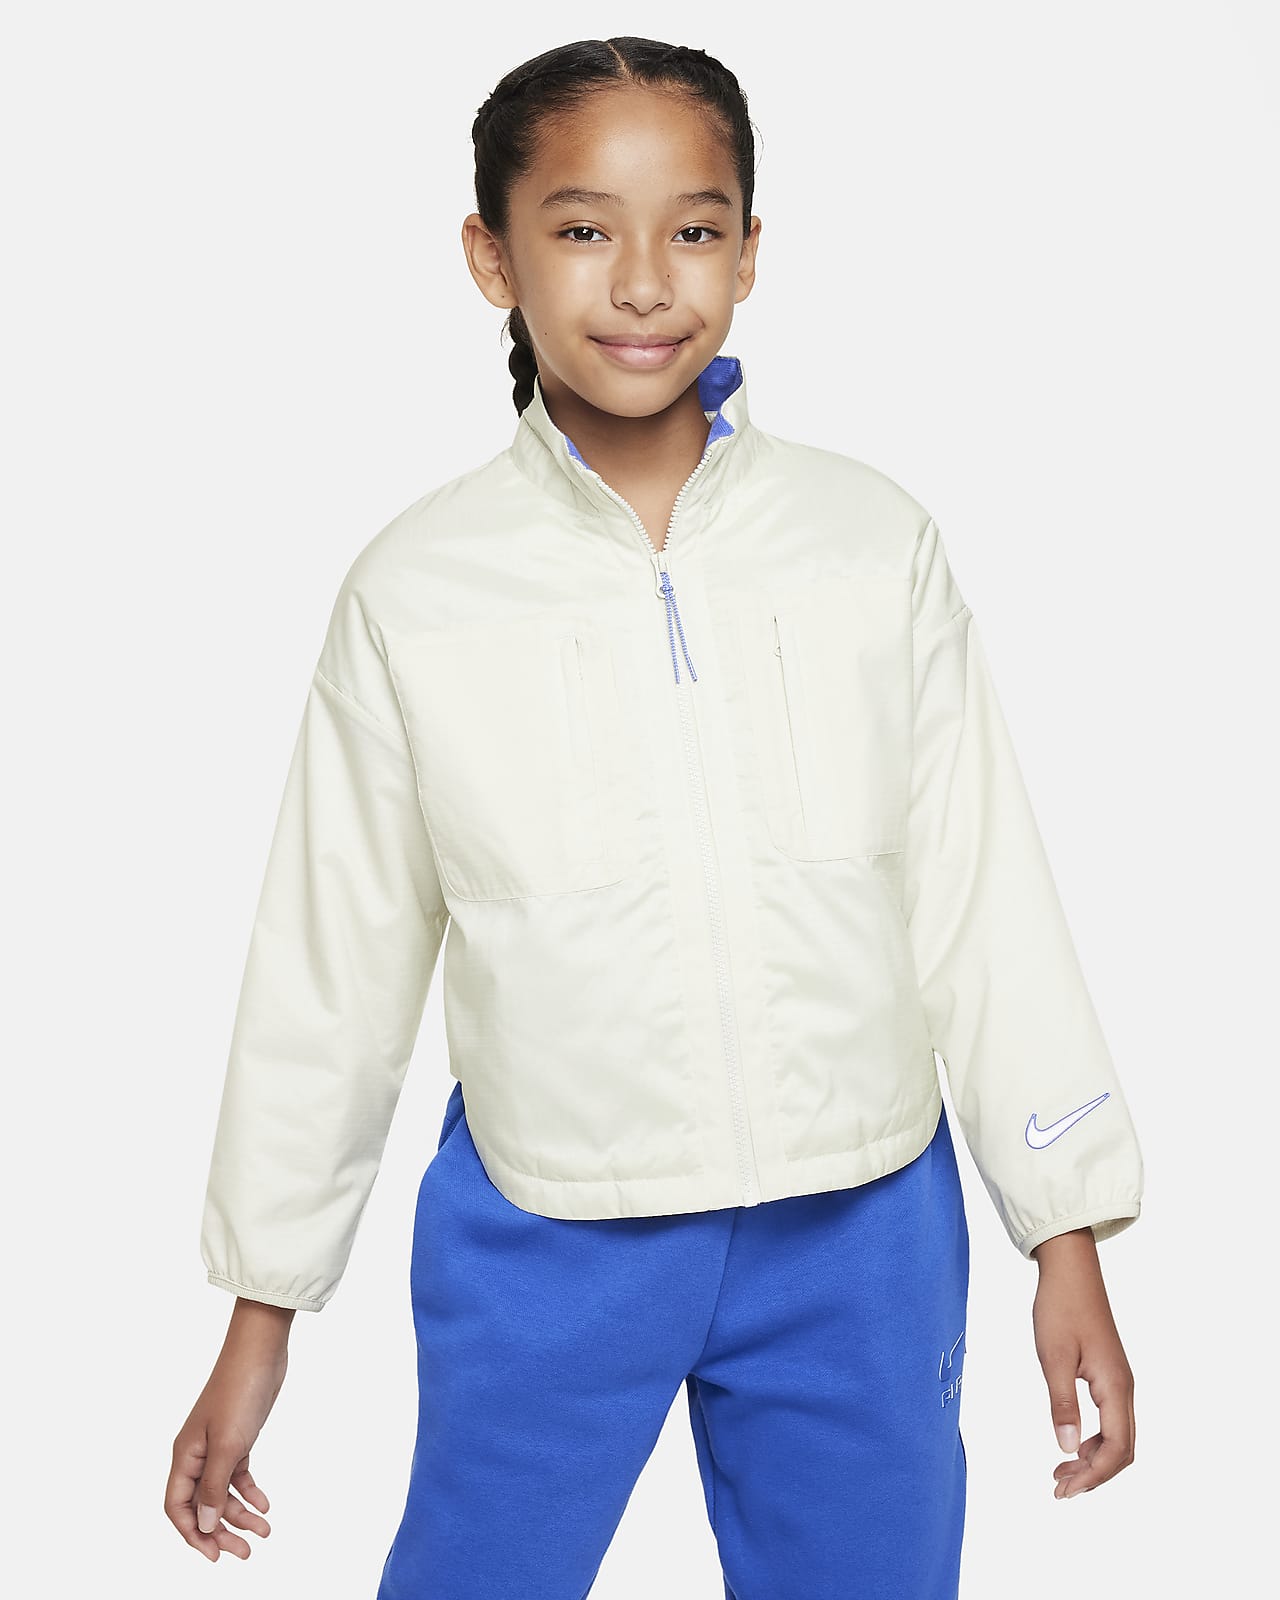 Therma-FIT Nike Repel Kids\' Shirt-Jacket. JP (Girls\') Sportswear Big Nike